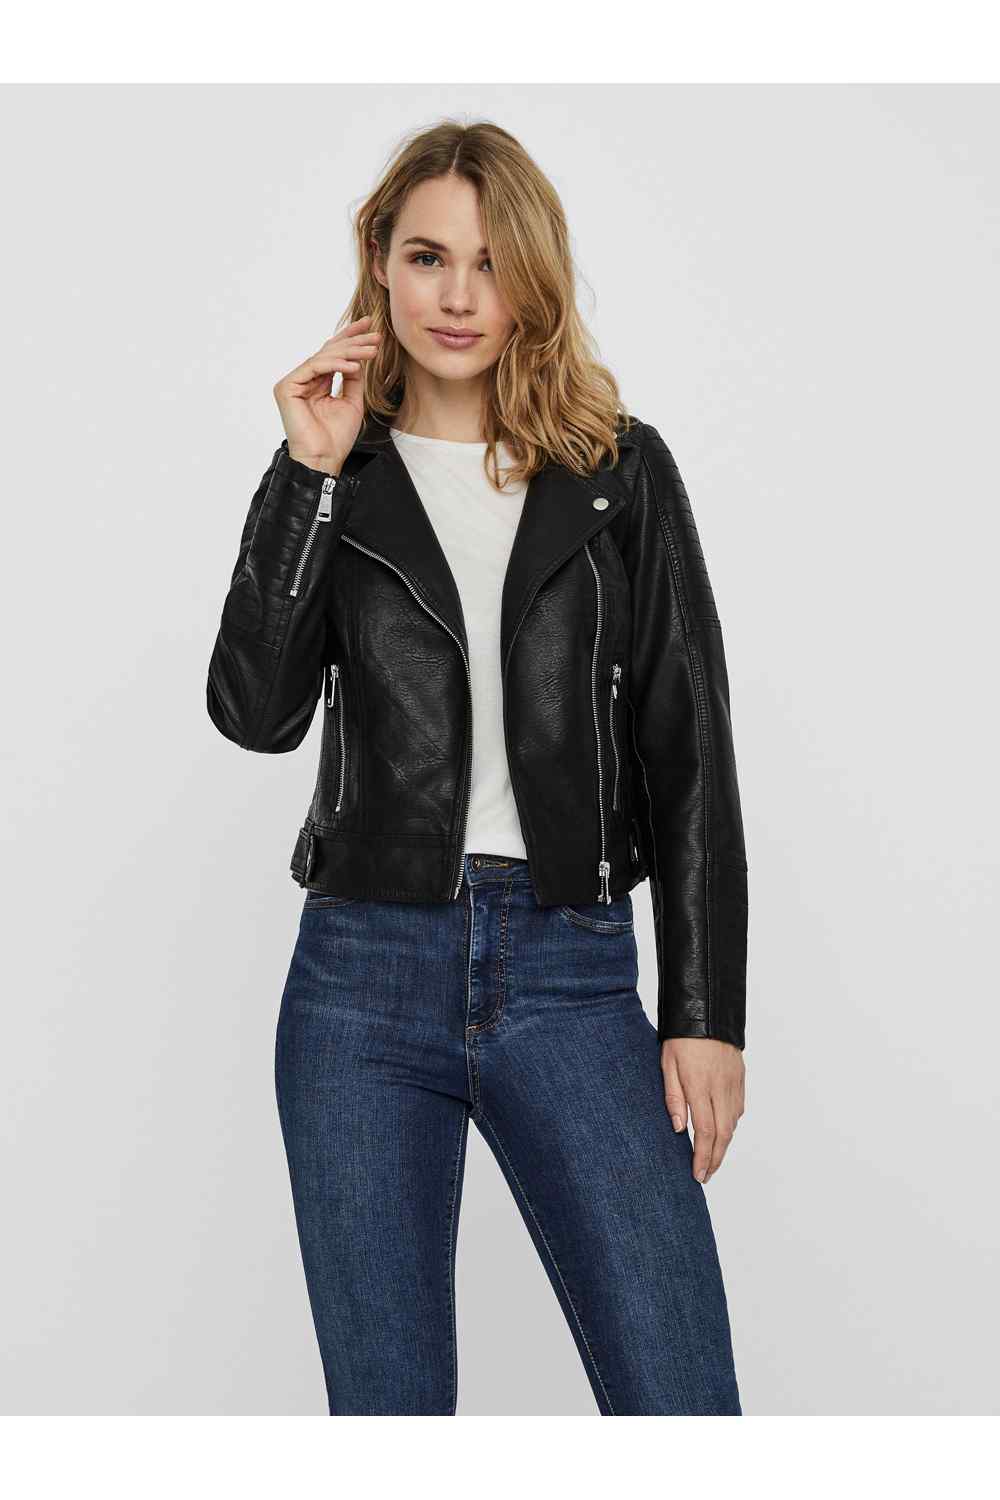 Vero Moda Kerri Ultra Jacket - Black 1 Shaws Department Stores